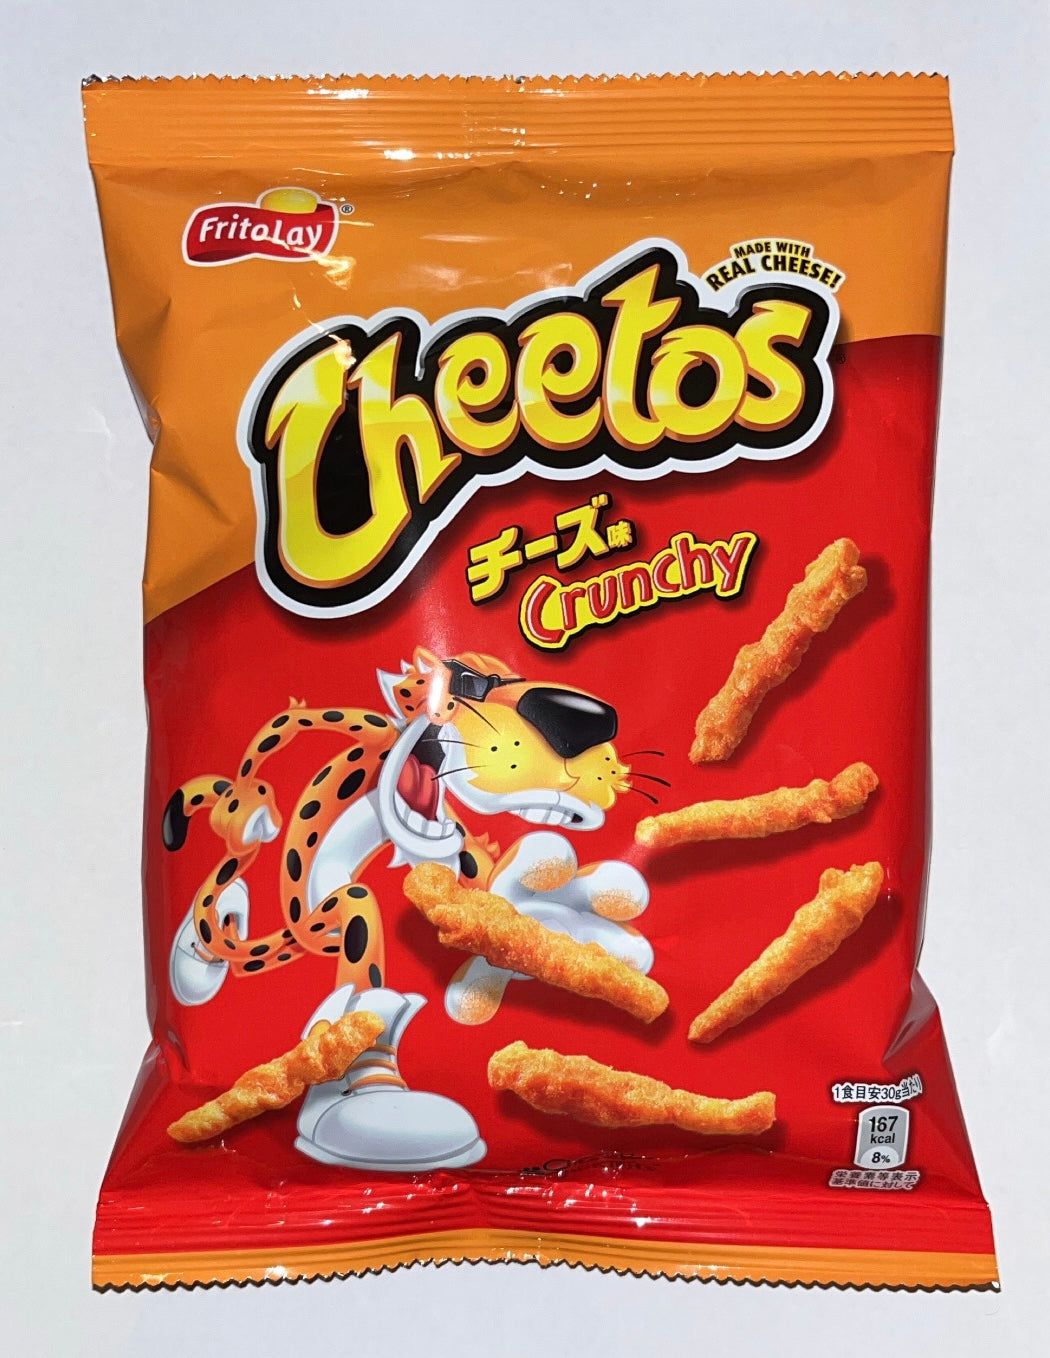 Cheetos Crunchy  Crunchy-verse 